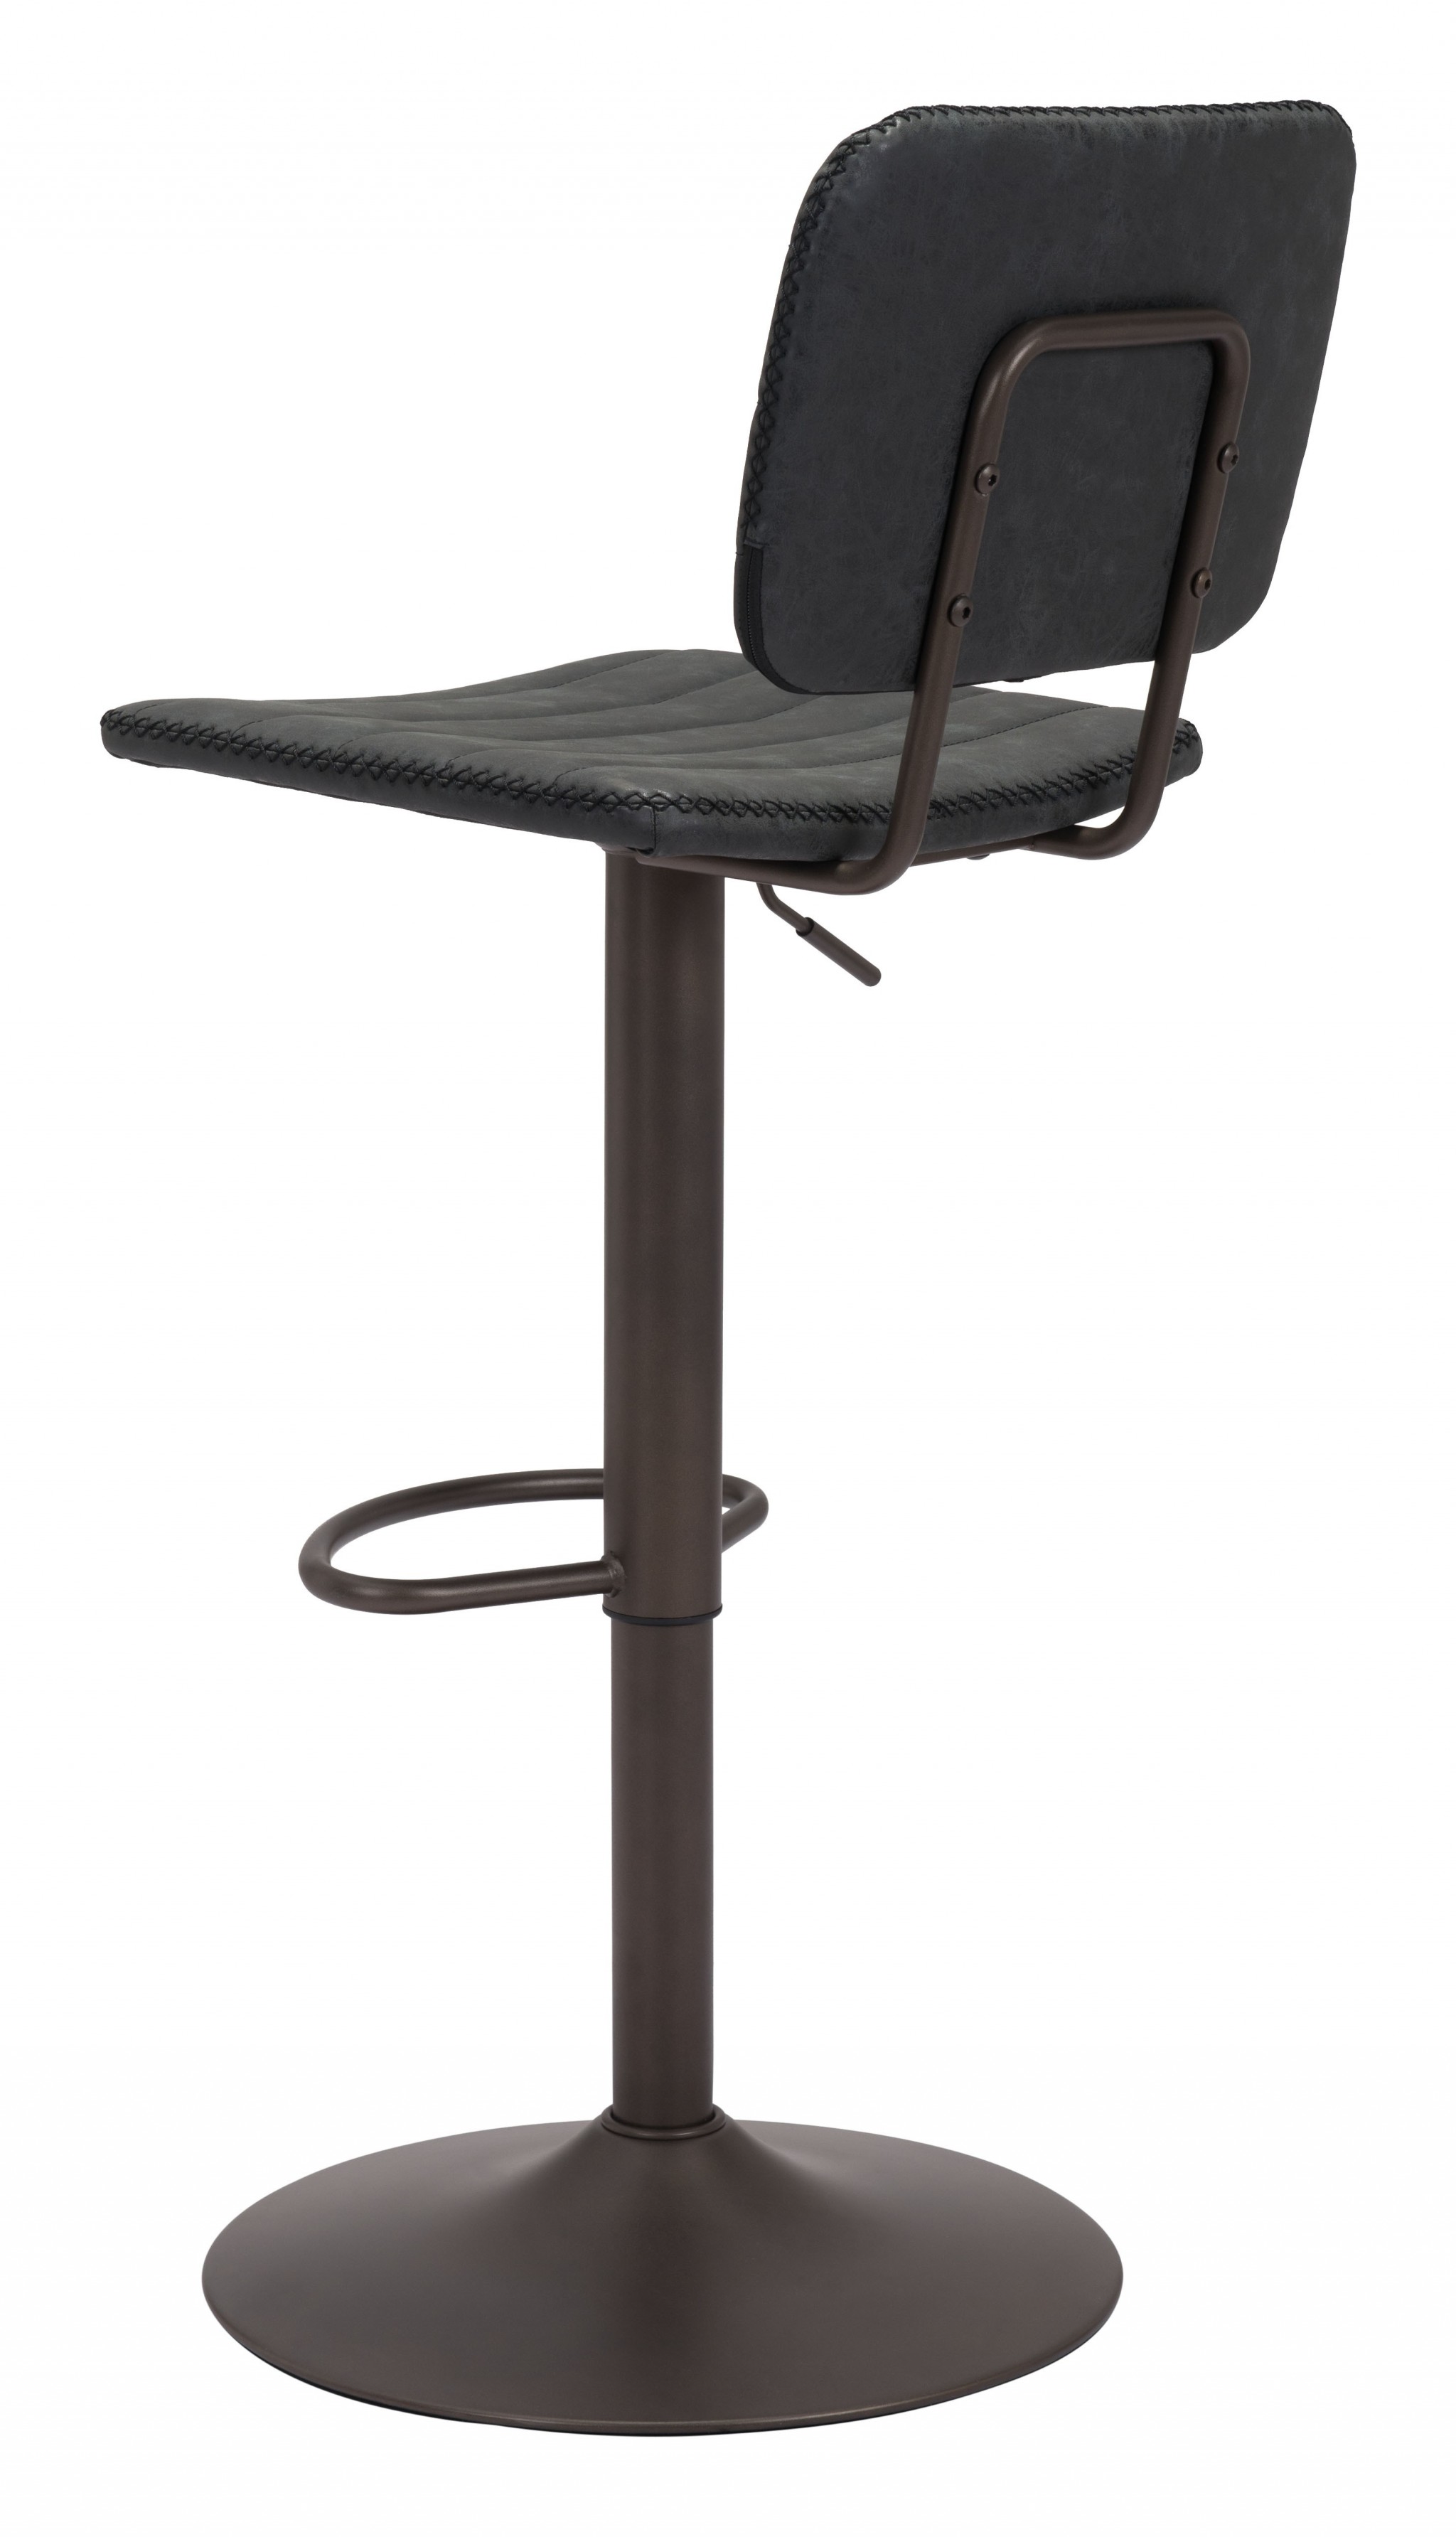 Modern Vintage Look Black Faux Leather Adjustable Bar Chair